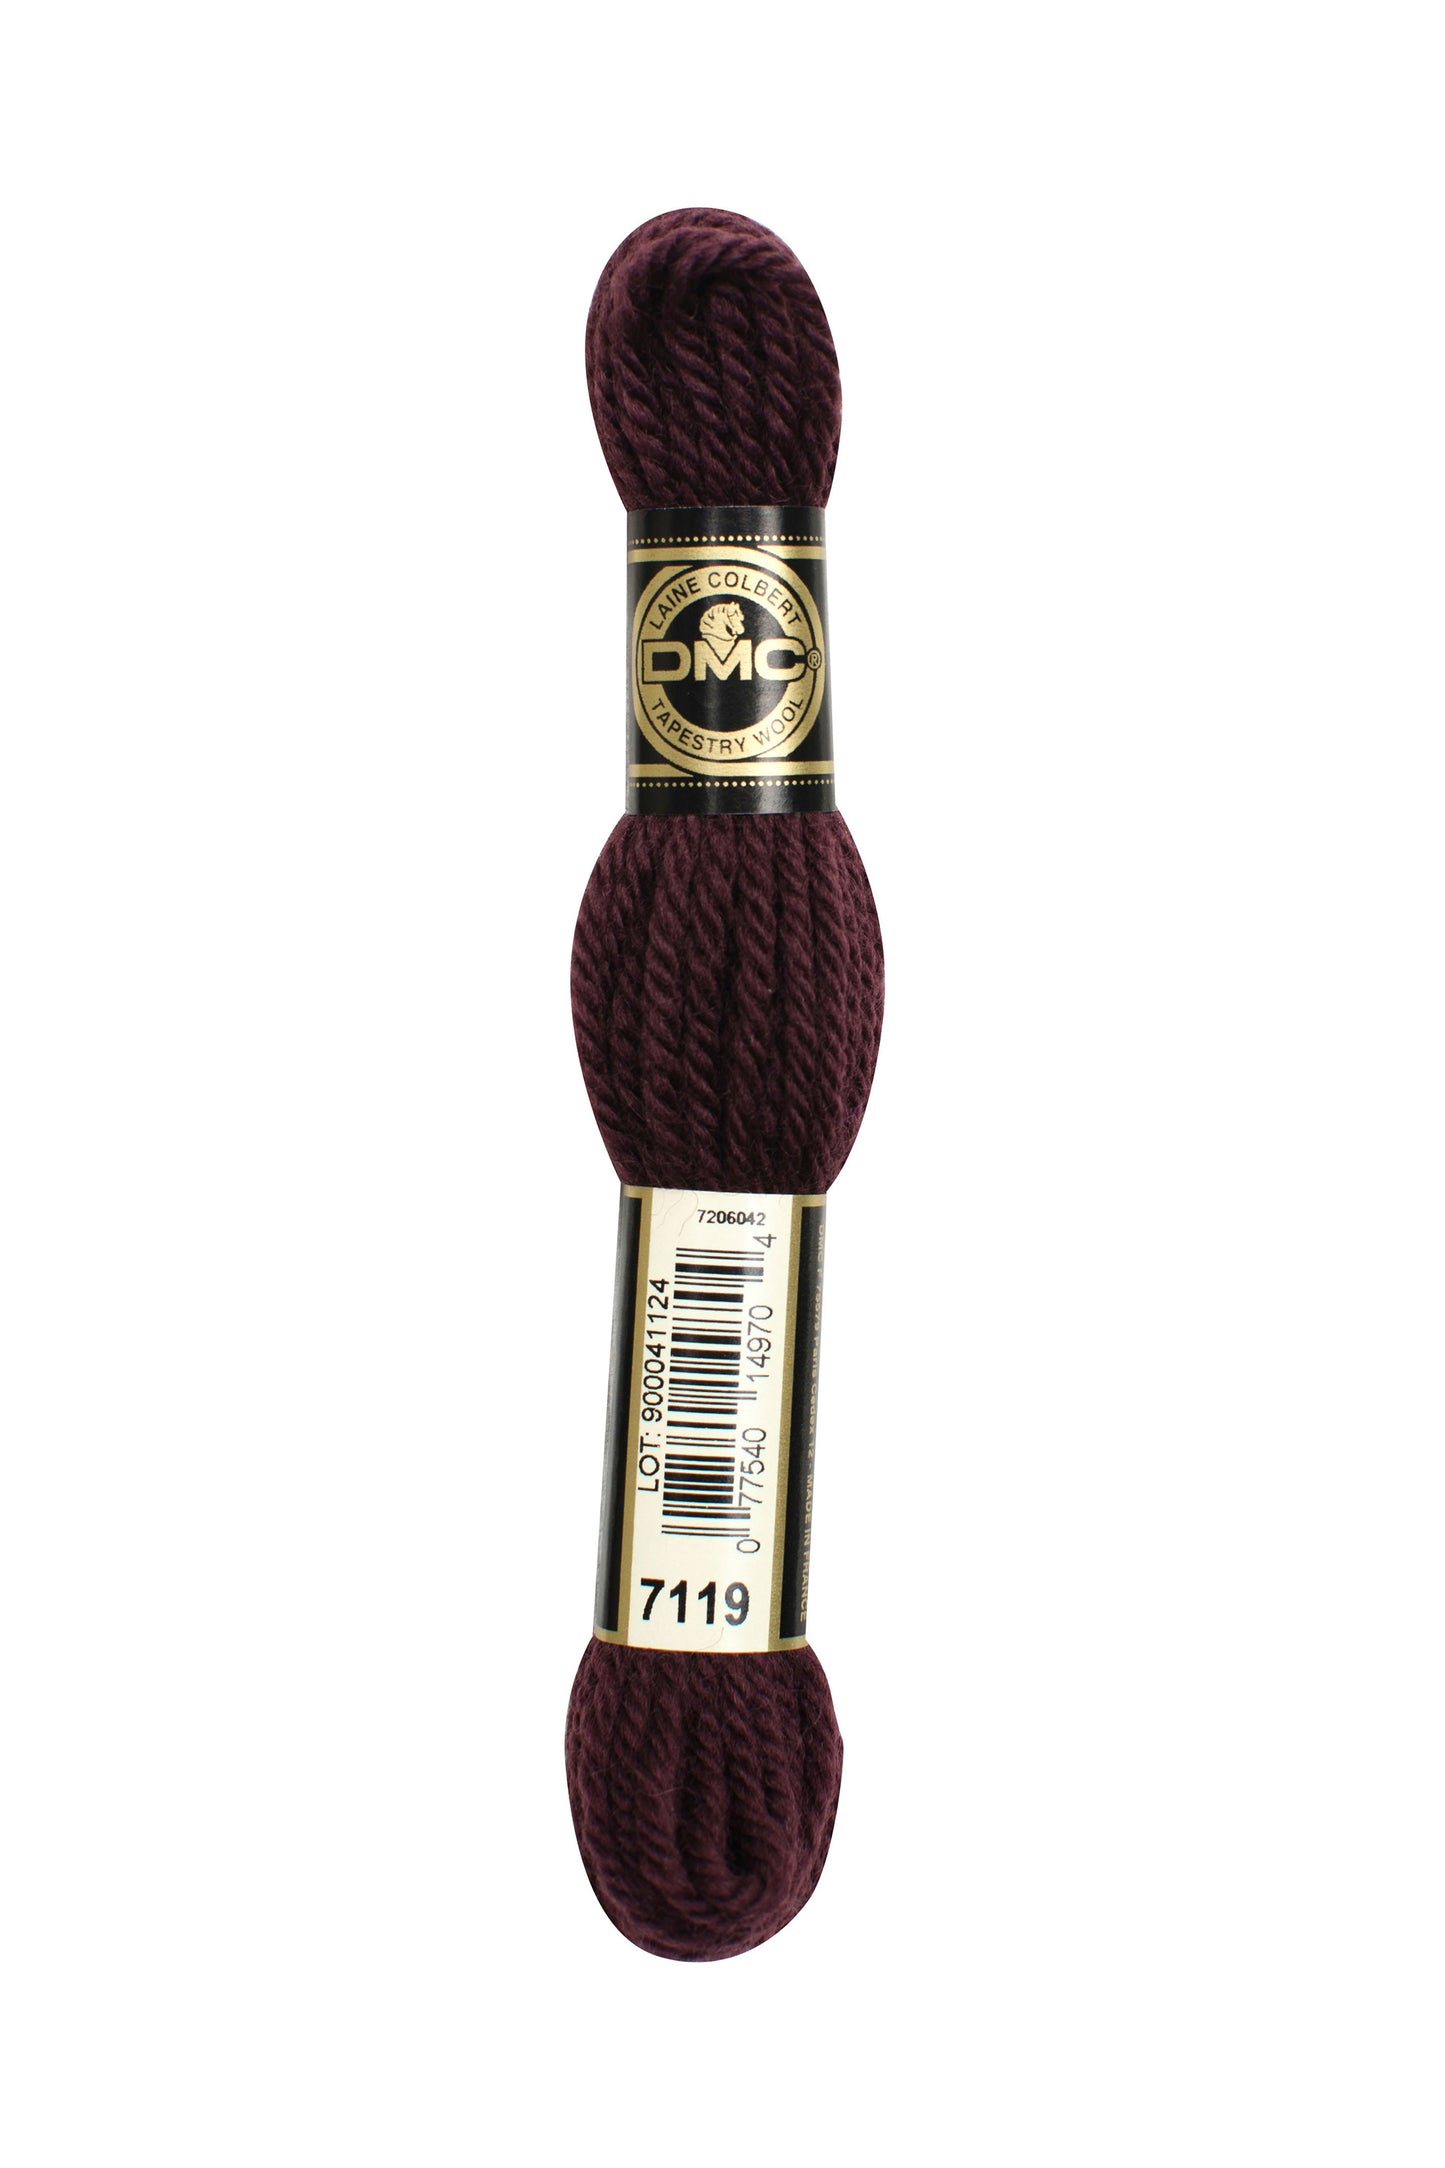 7119 – DMC Tapestry Wool